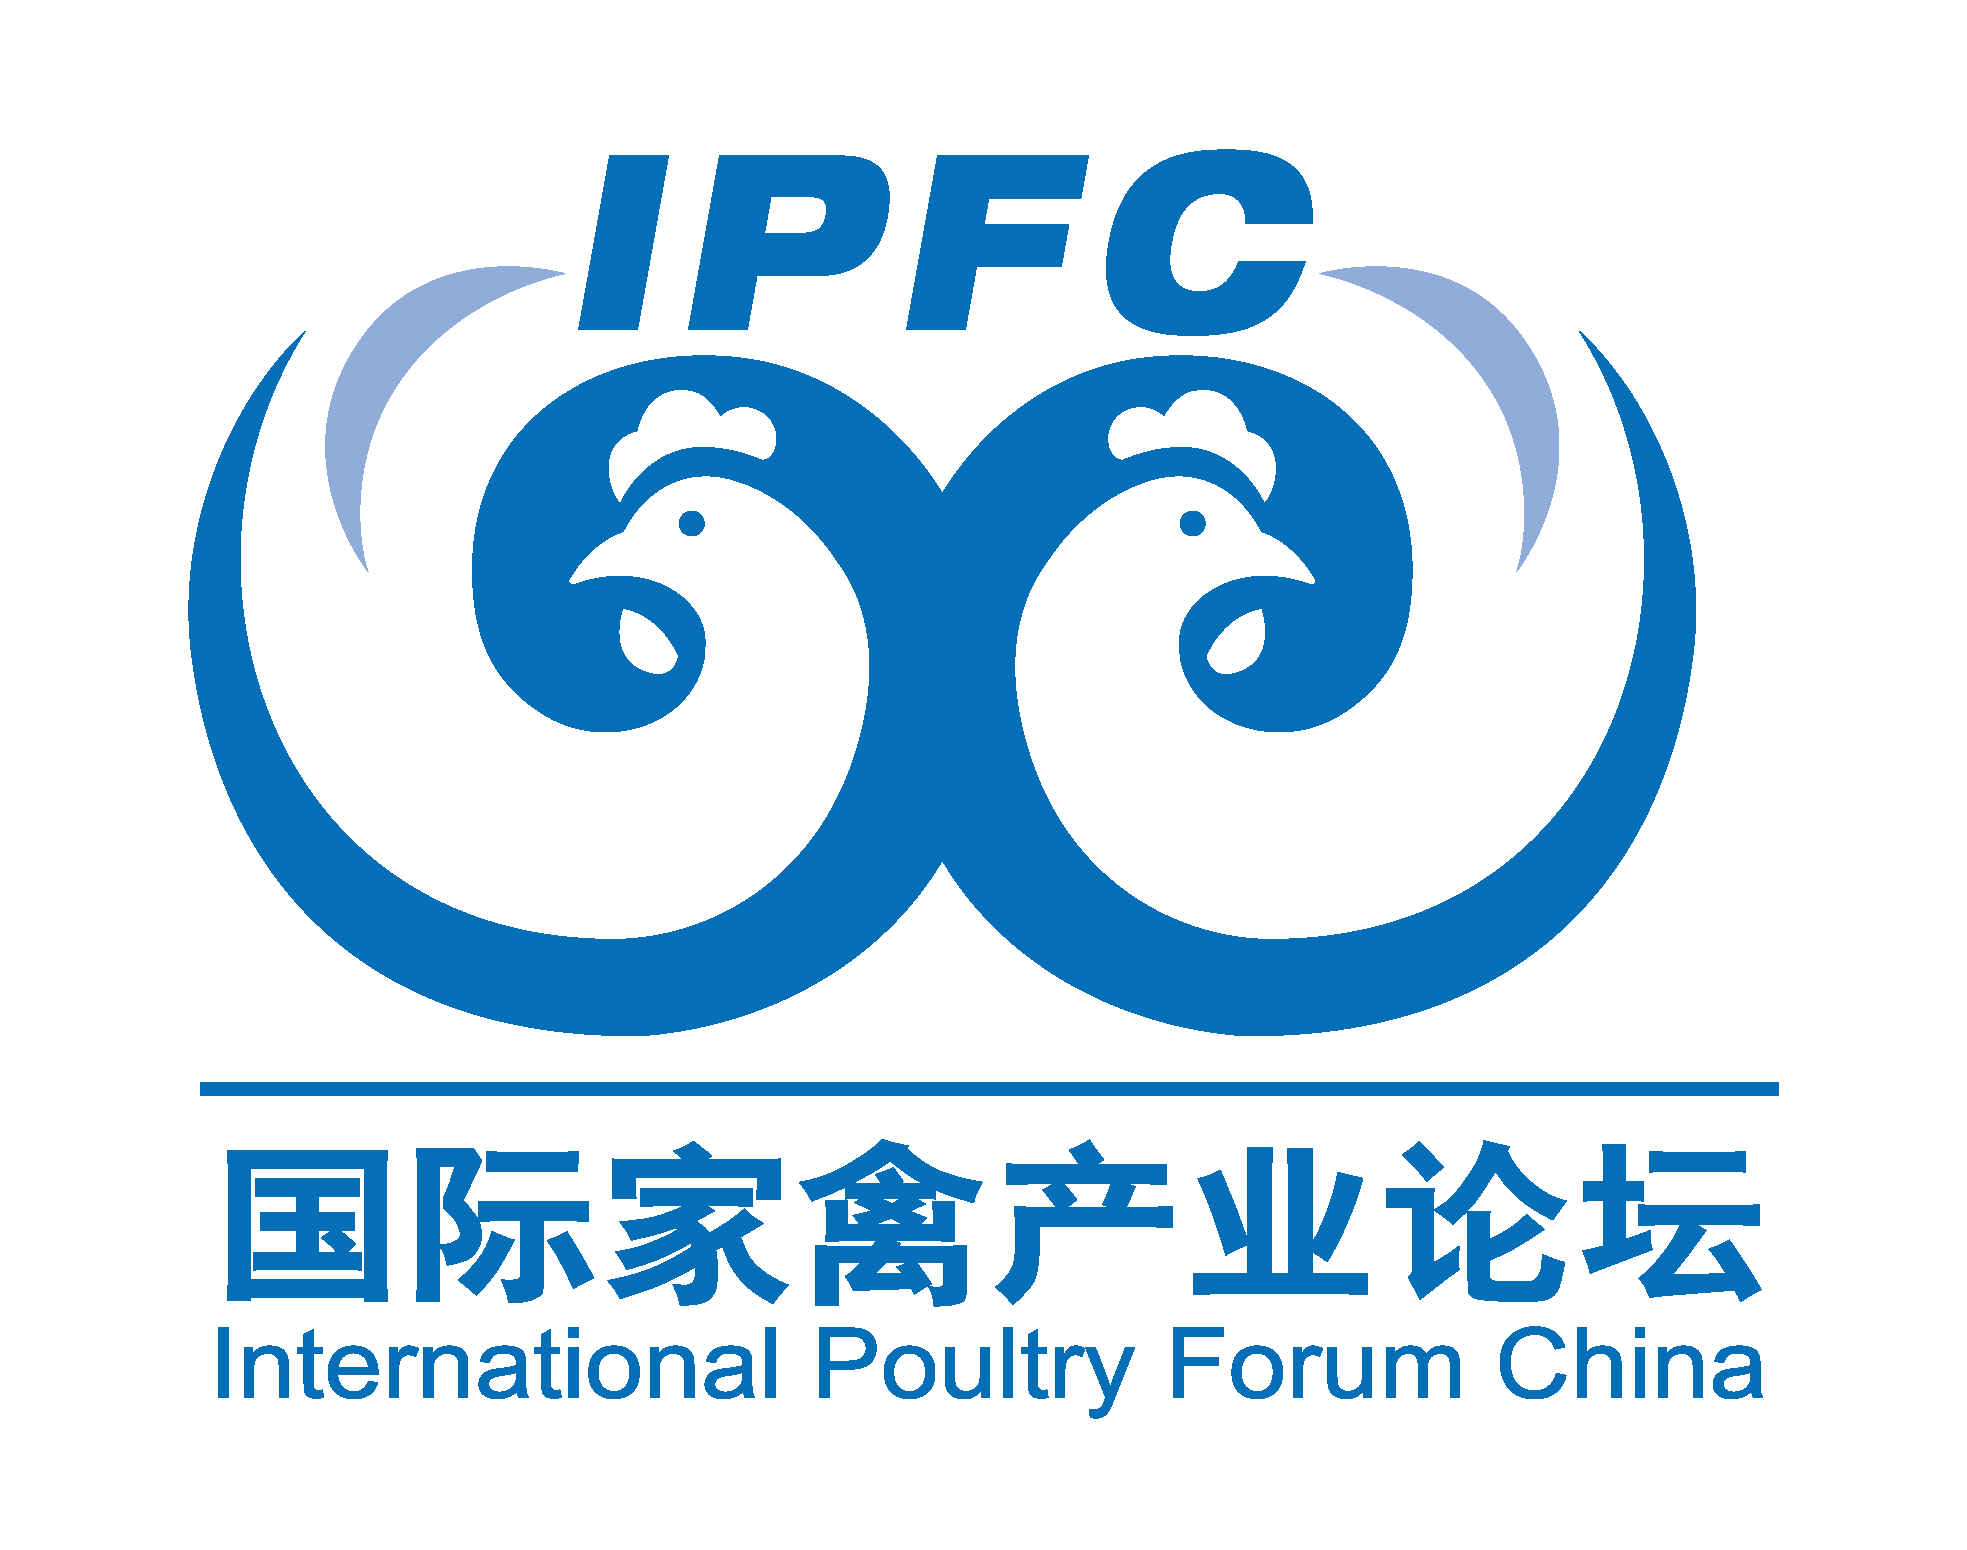 International Poultry Forum China Logo